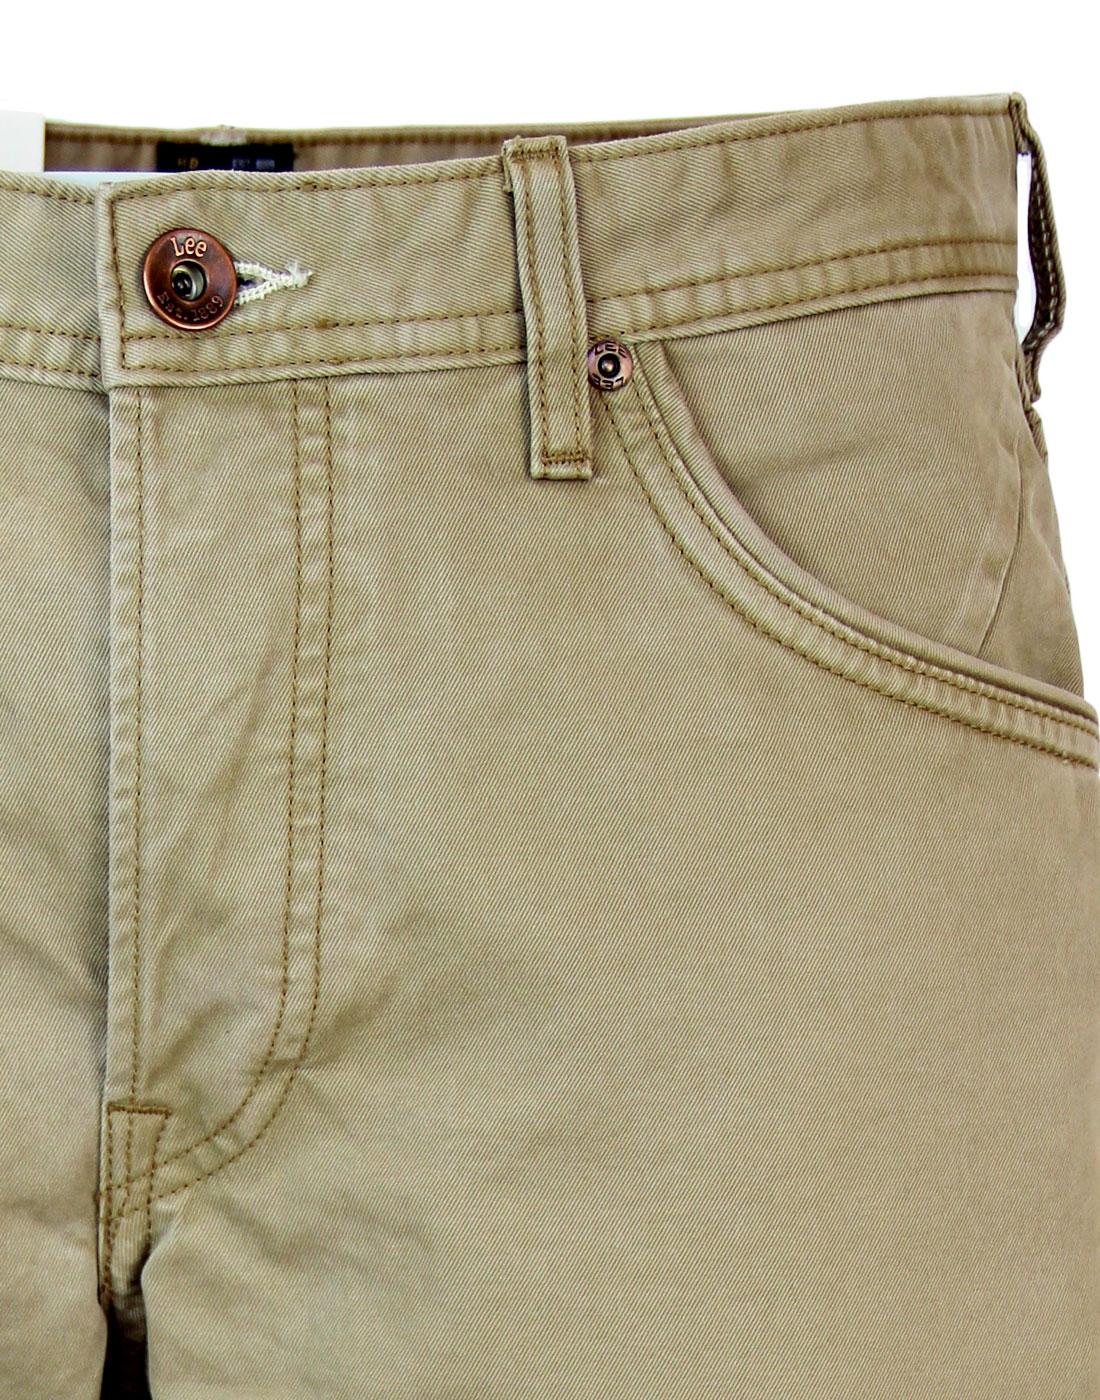 LEE JEANS Daren Retro Regular Slim Cotton Twill Jeans in Kelp